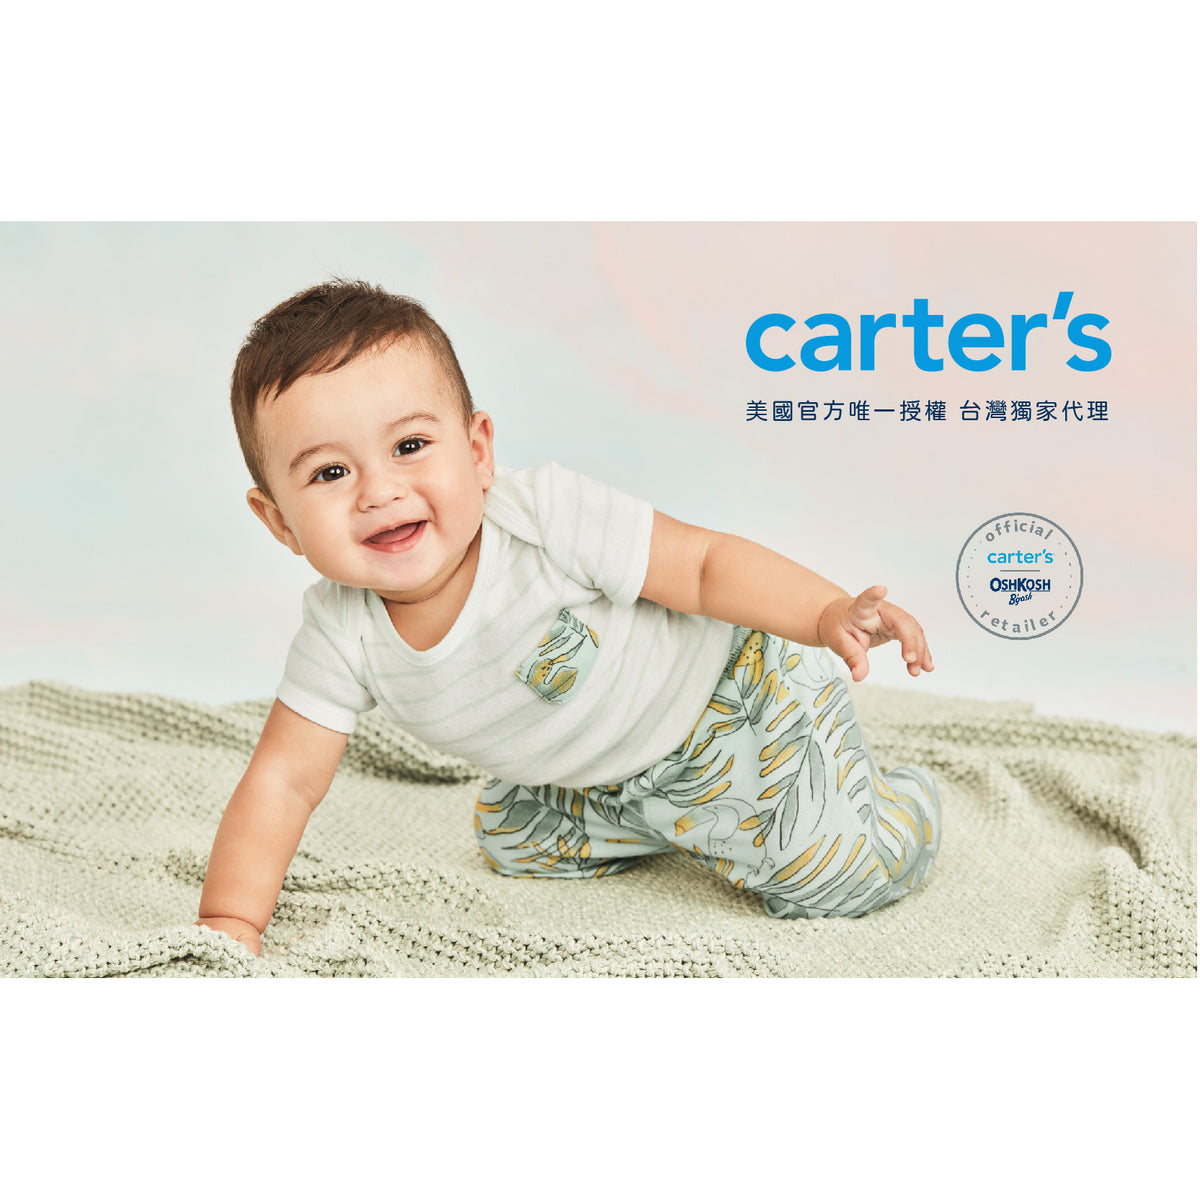 Carter's 俏皮墨綠塗鴉2件組套裝(12M-24M)